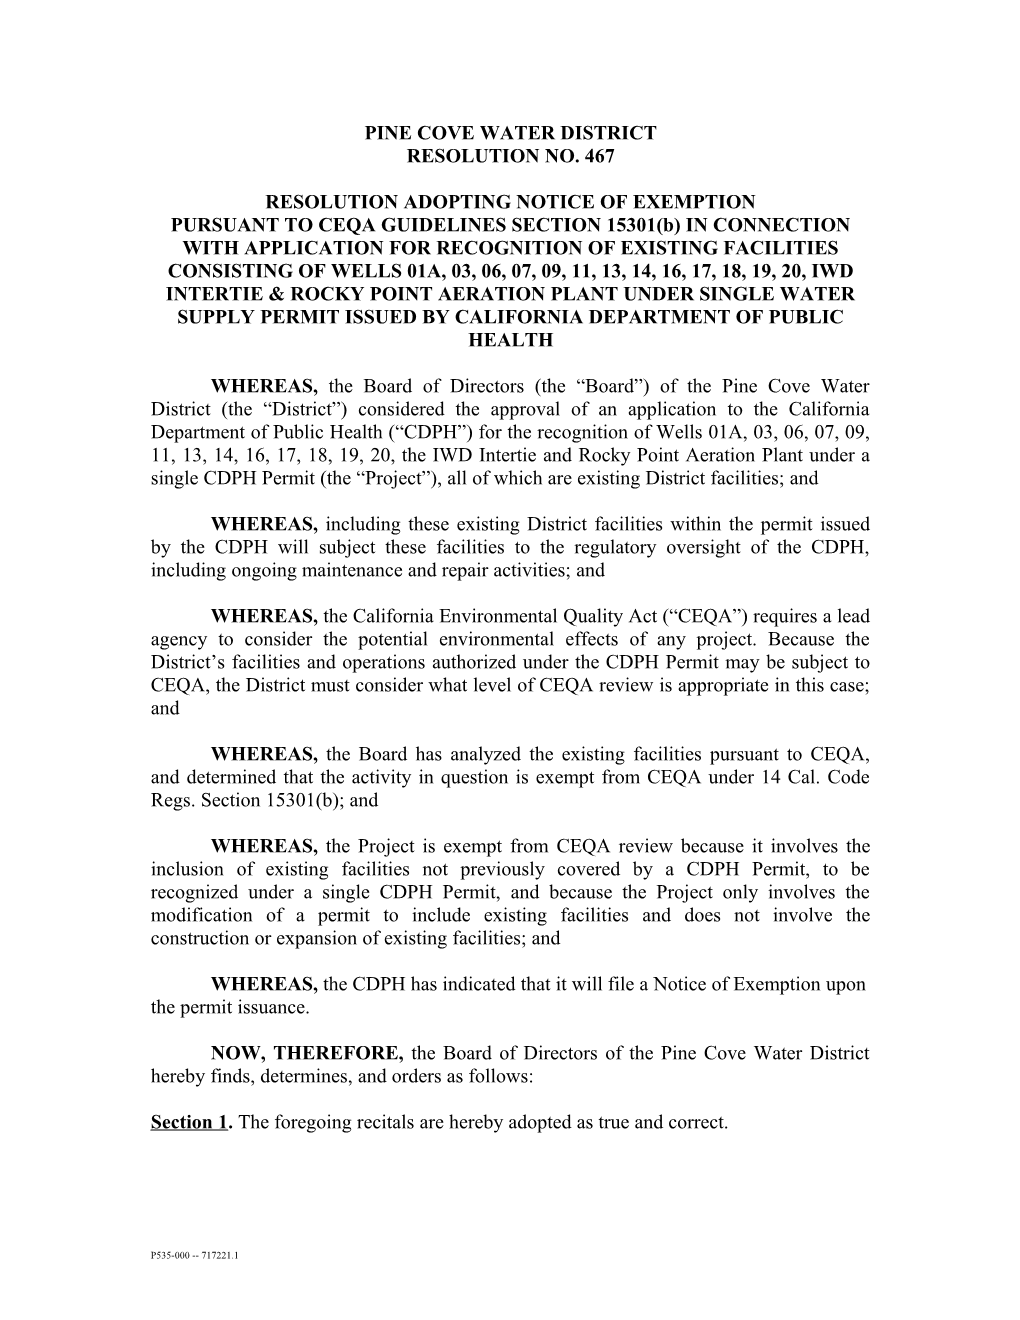 Resolution Adopting Notice of Exemption